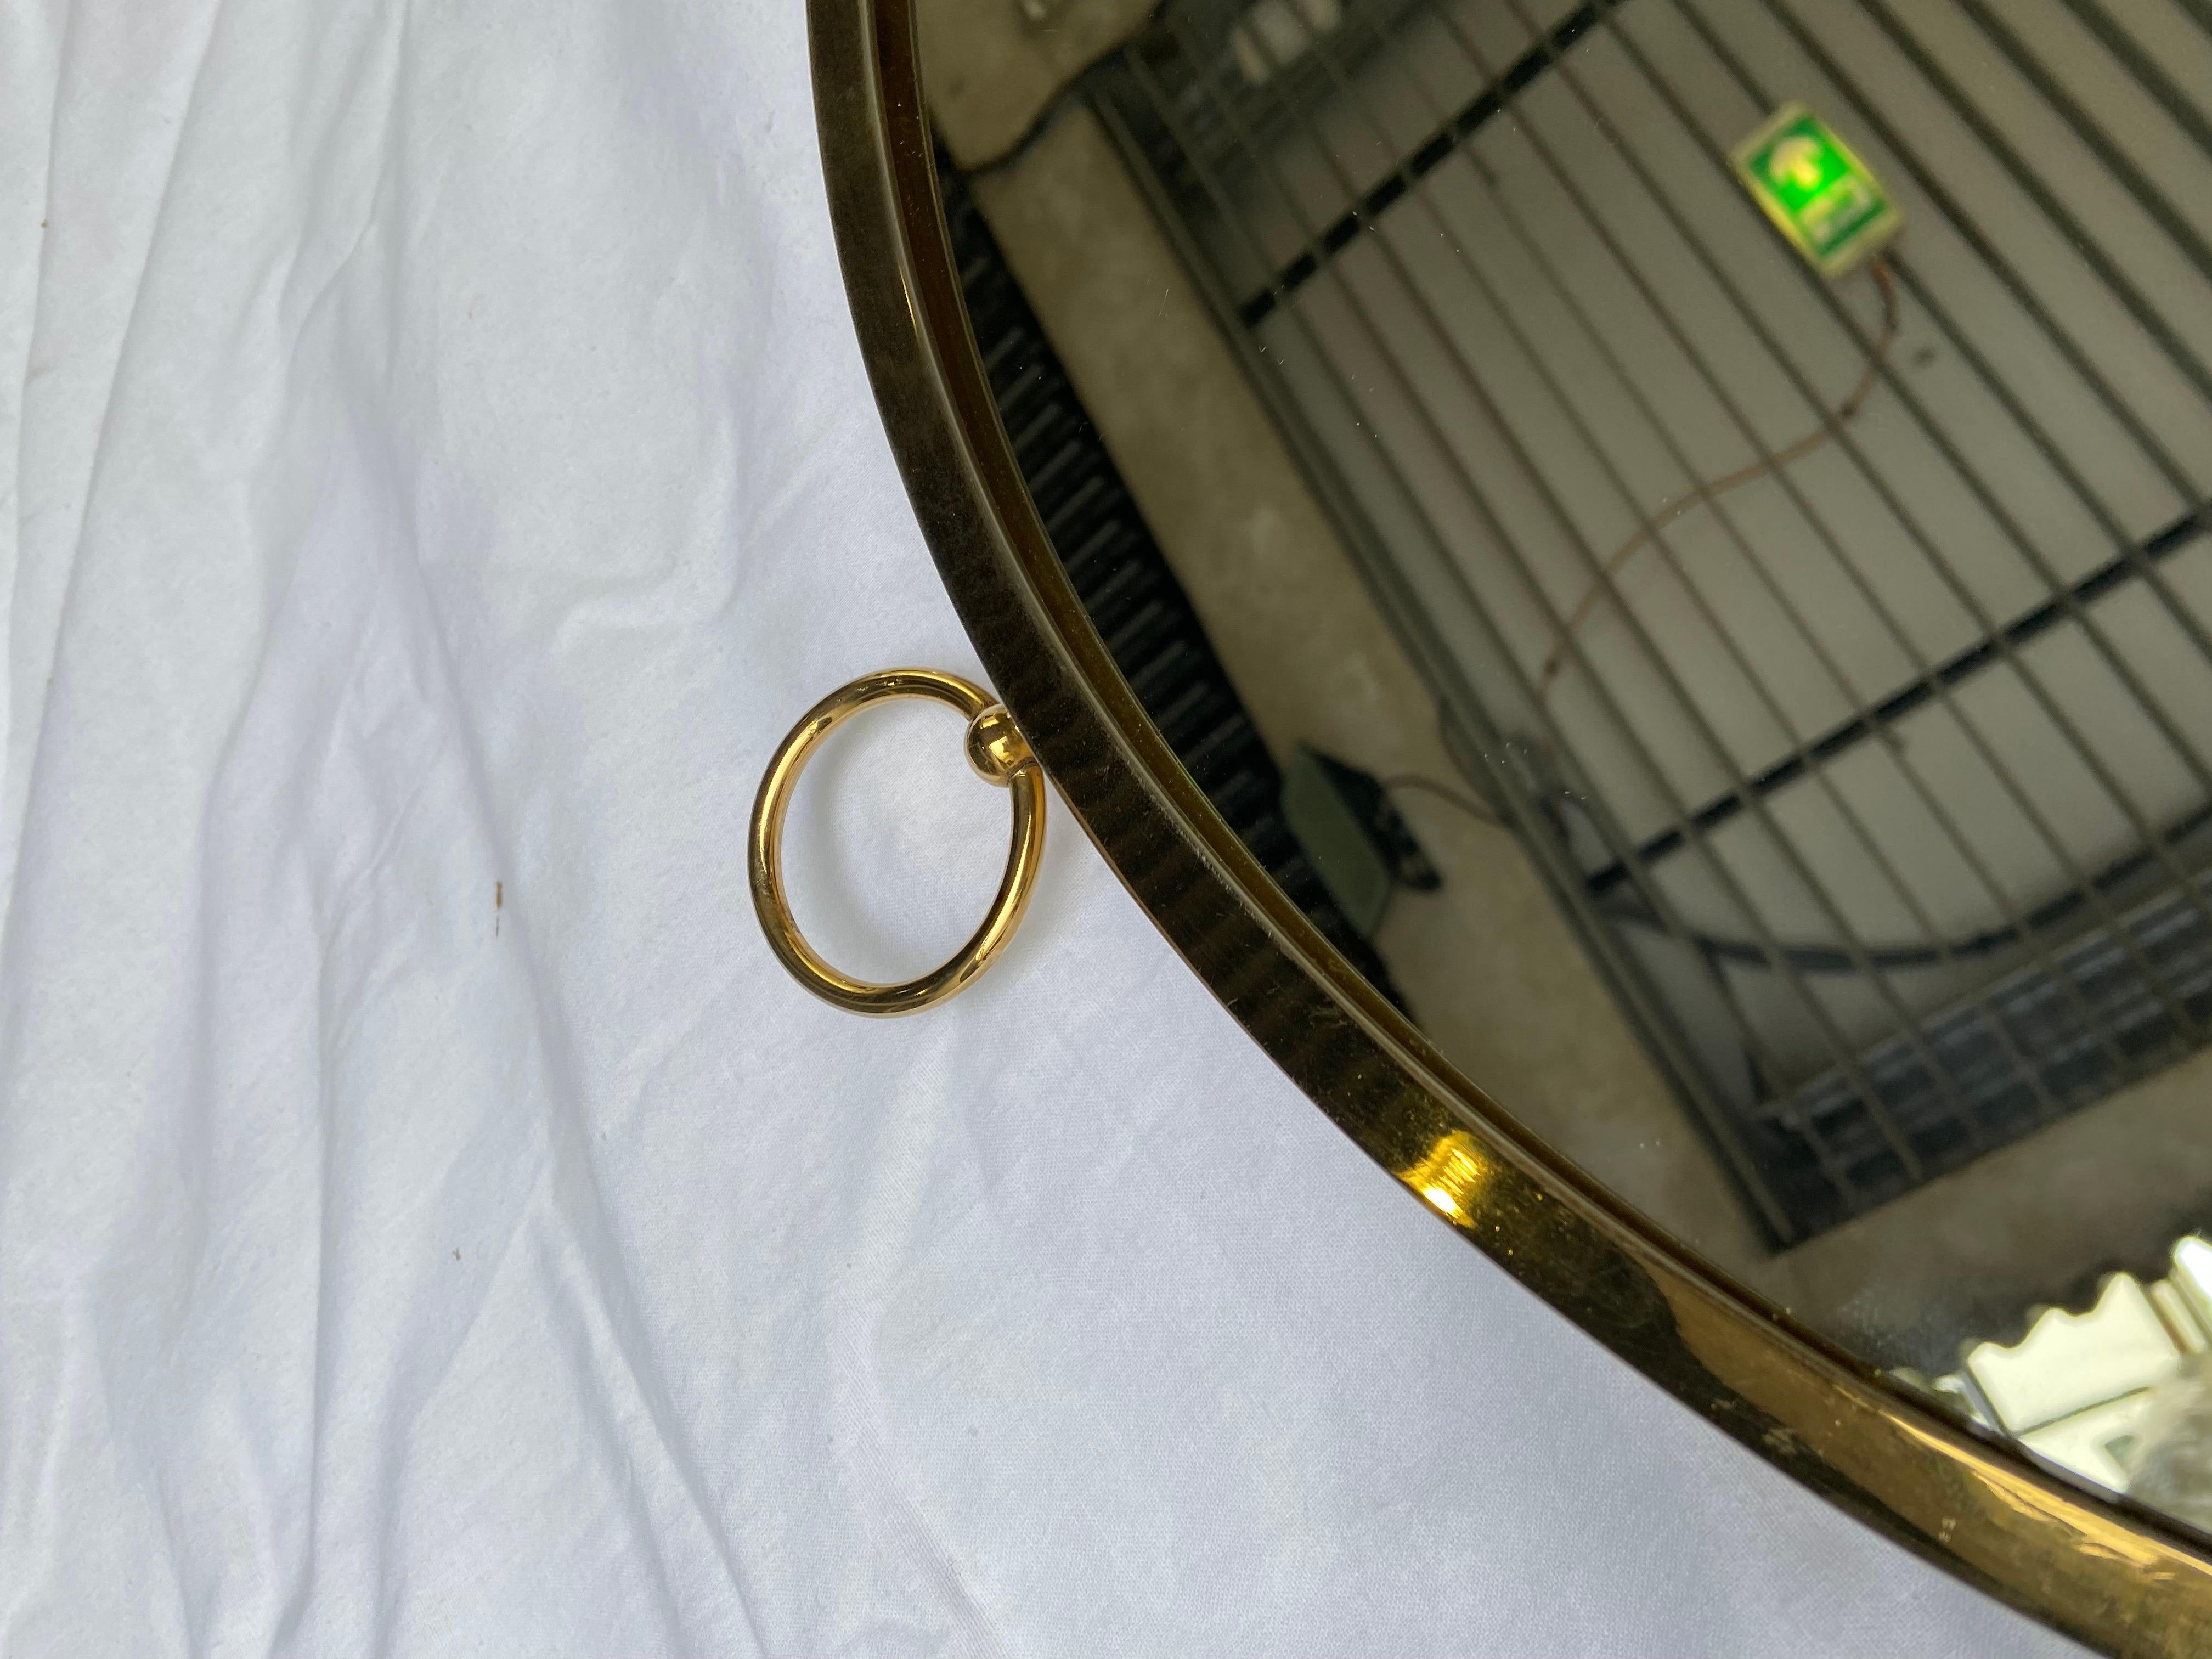 Miroir à soufflets - Piero Fornasetti 
Miroir et laiton 
Mesure : Diamètre 49 cm 
Prix : 1650 euros.